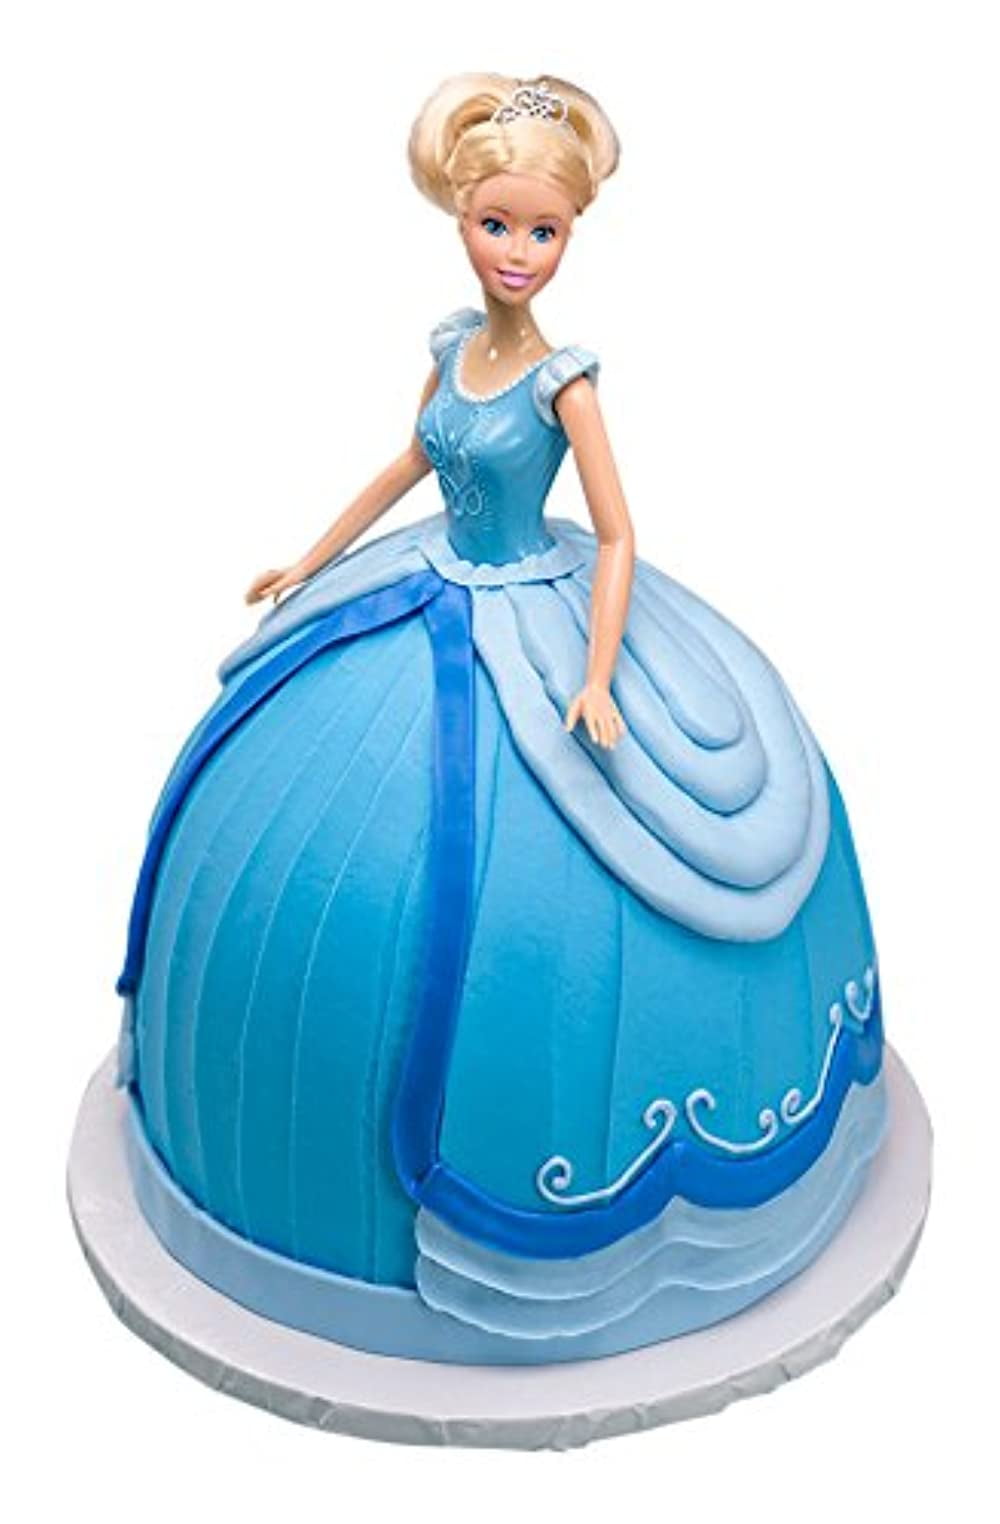 Cinderella Disney Princess cake decoration Decoset cake topper set party toys